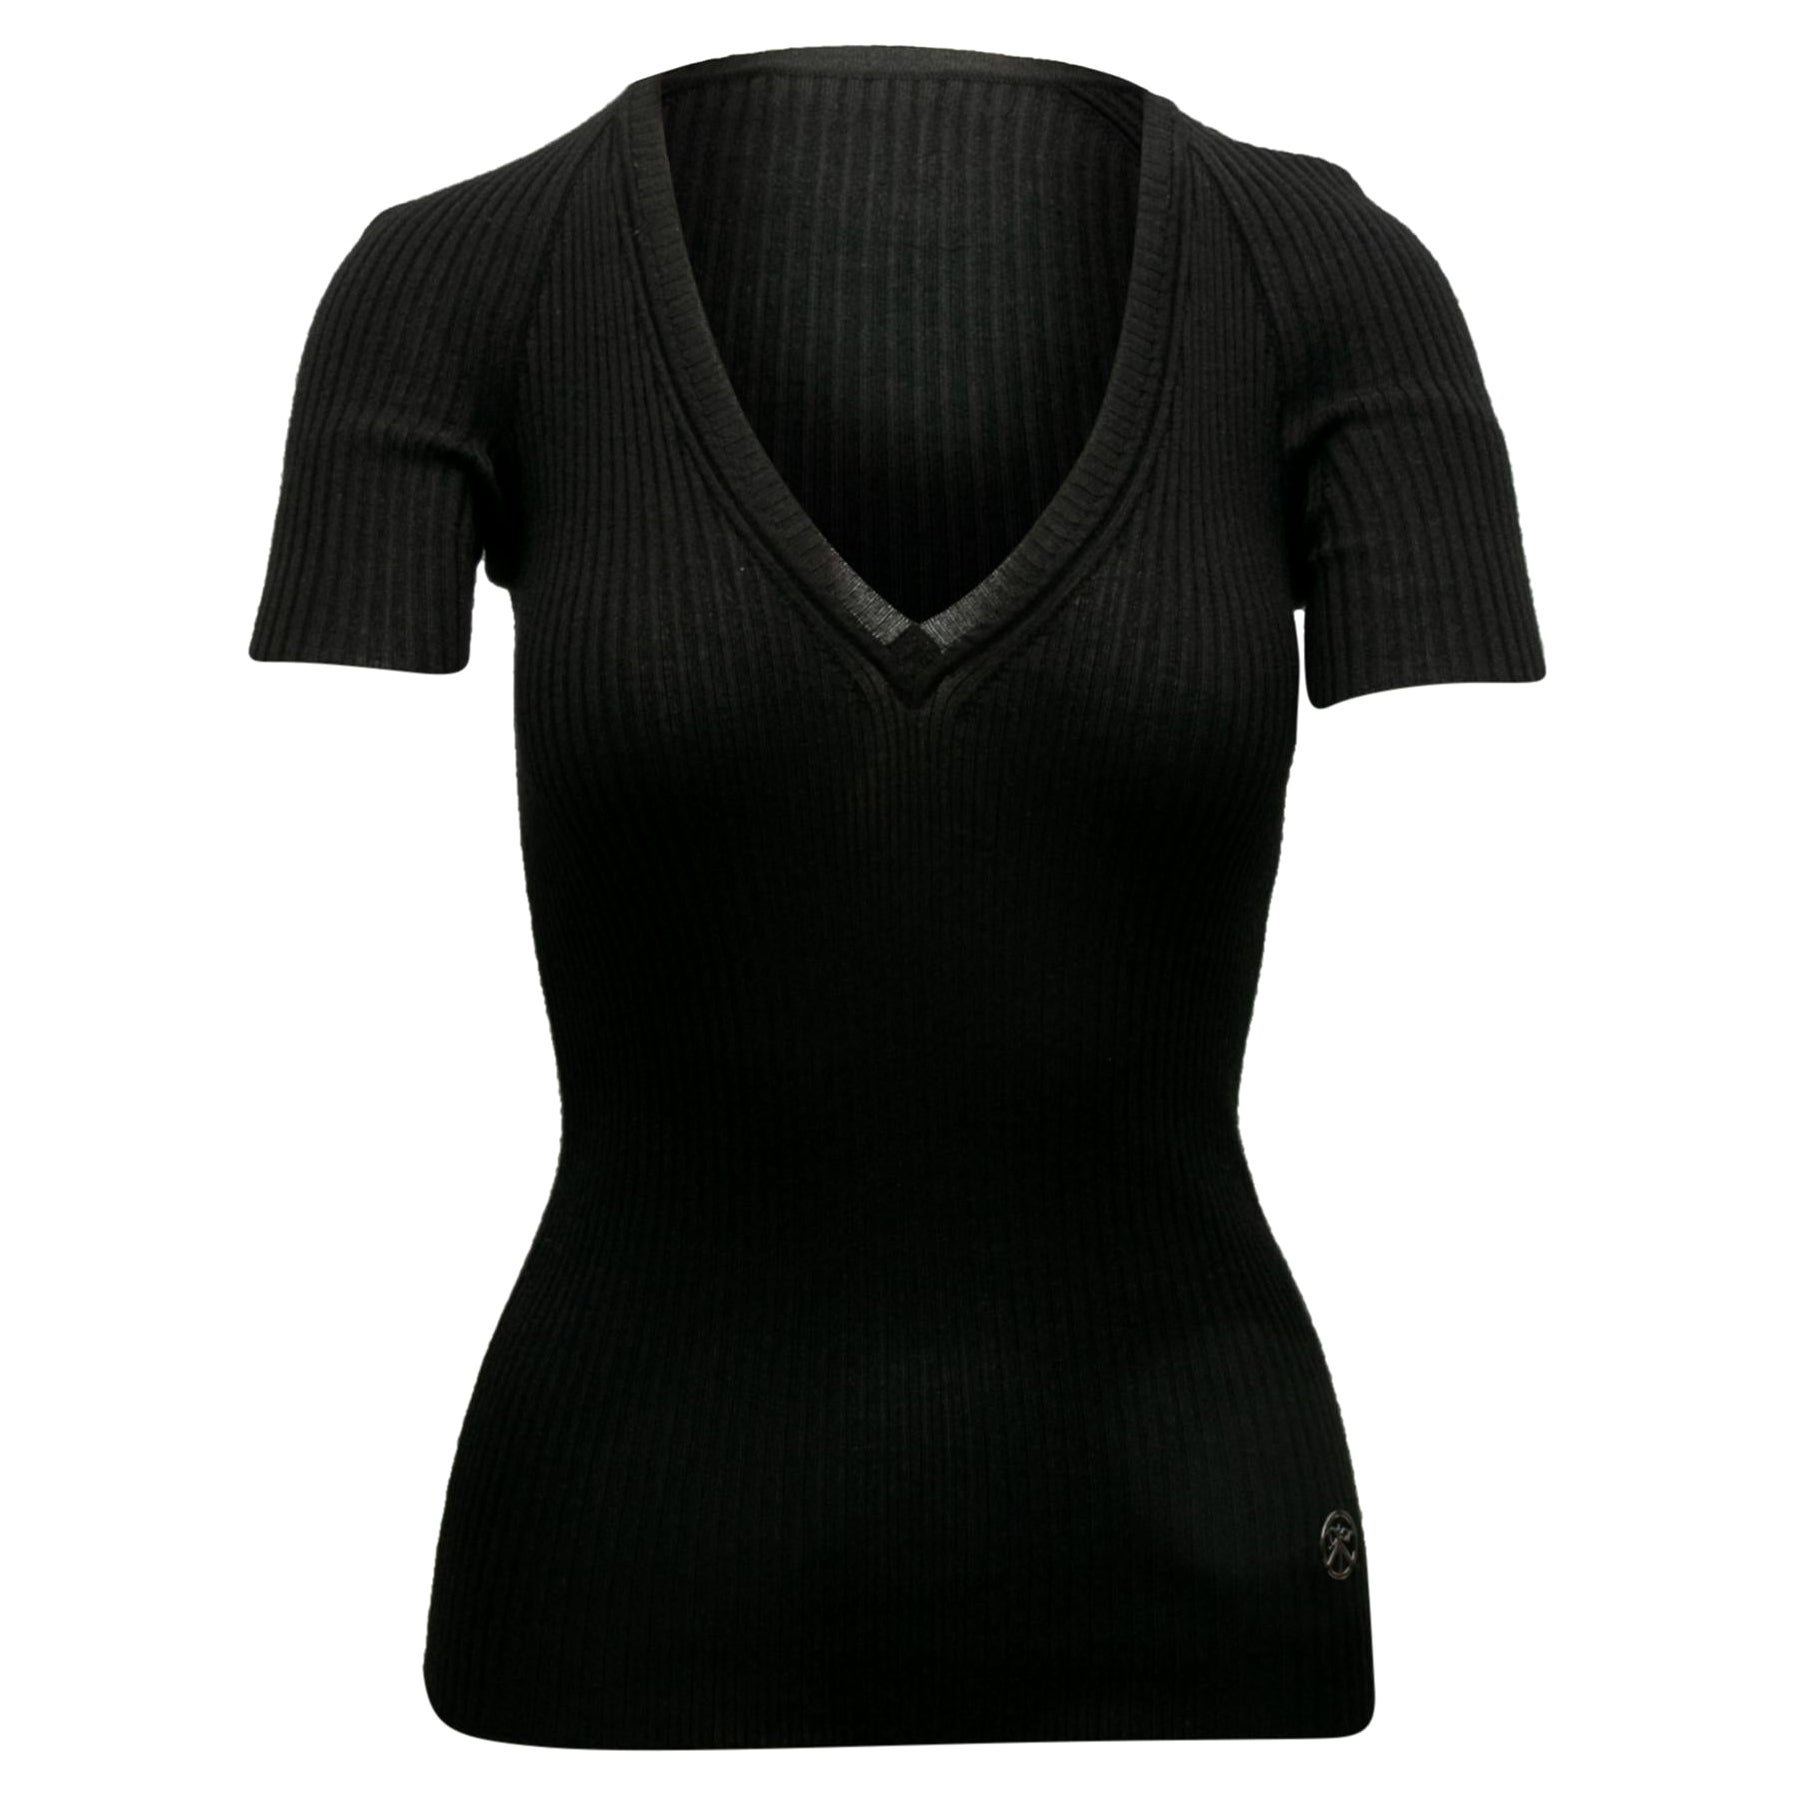 Christian Dior Black Boutique Short Sleeve Top